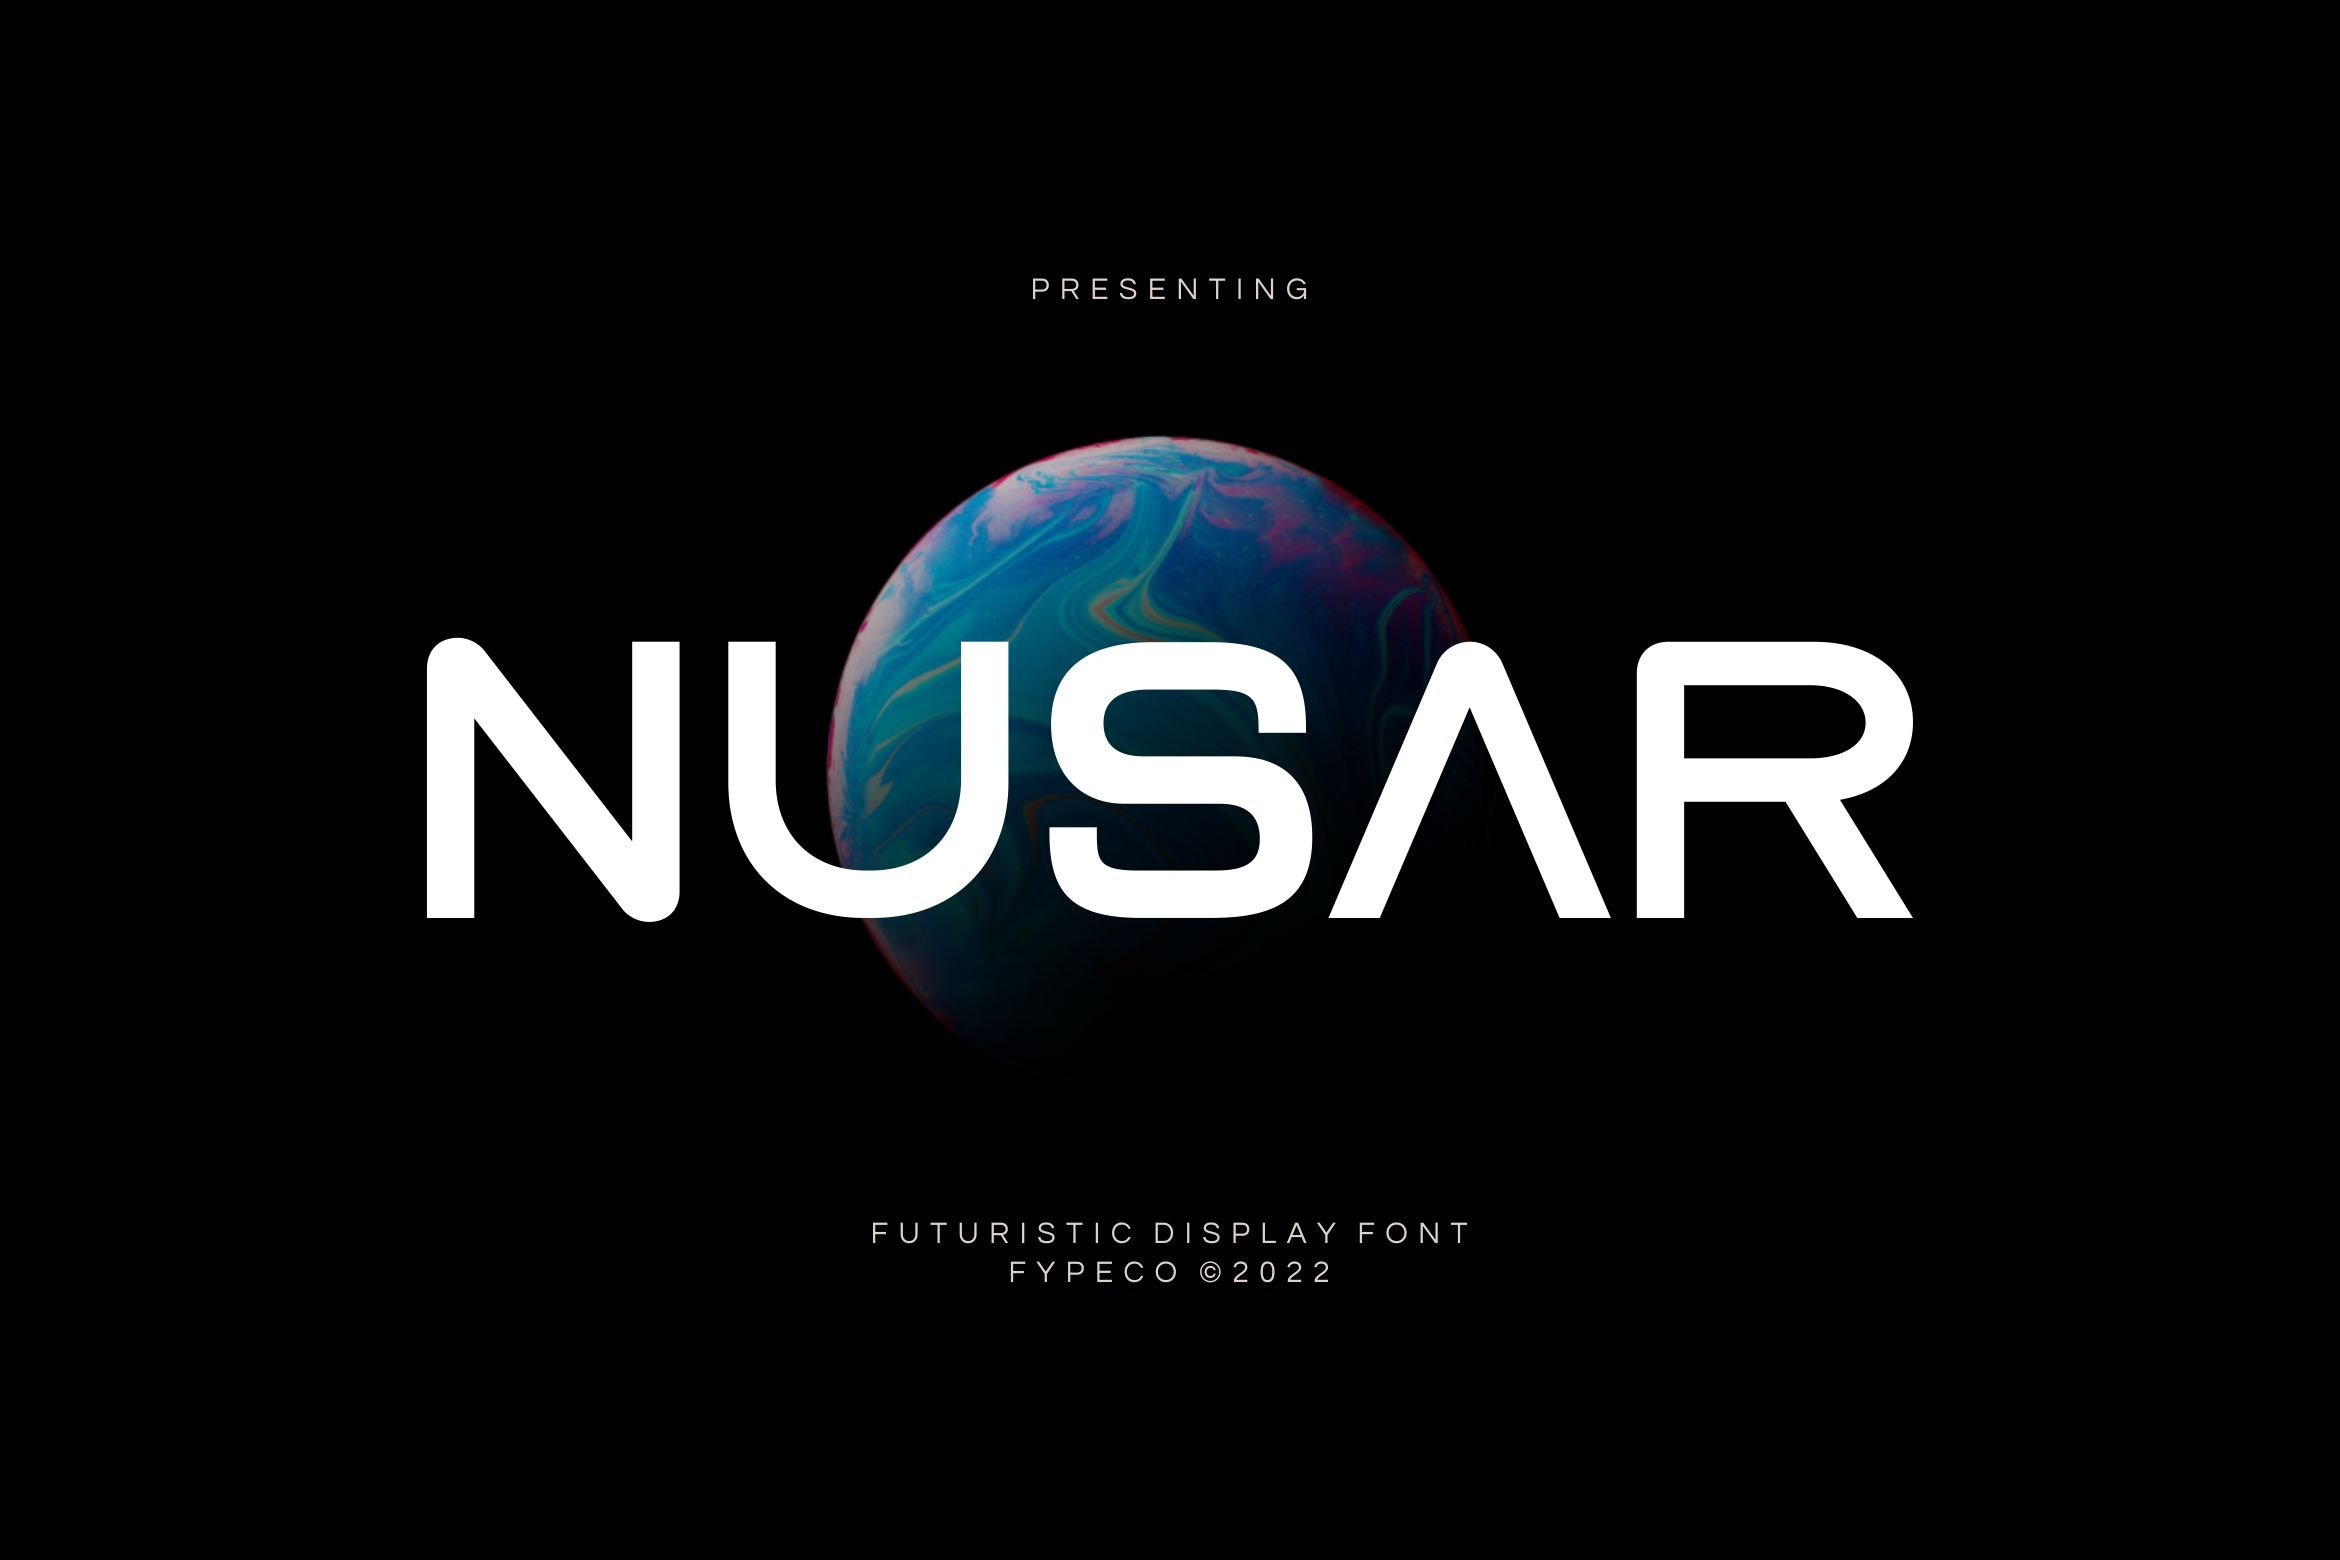 Nusar-Futuristic Display Font cover image.